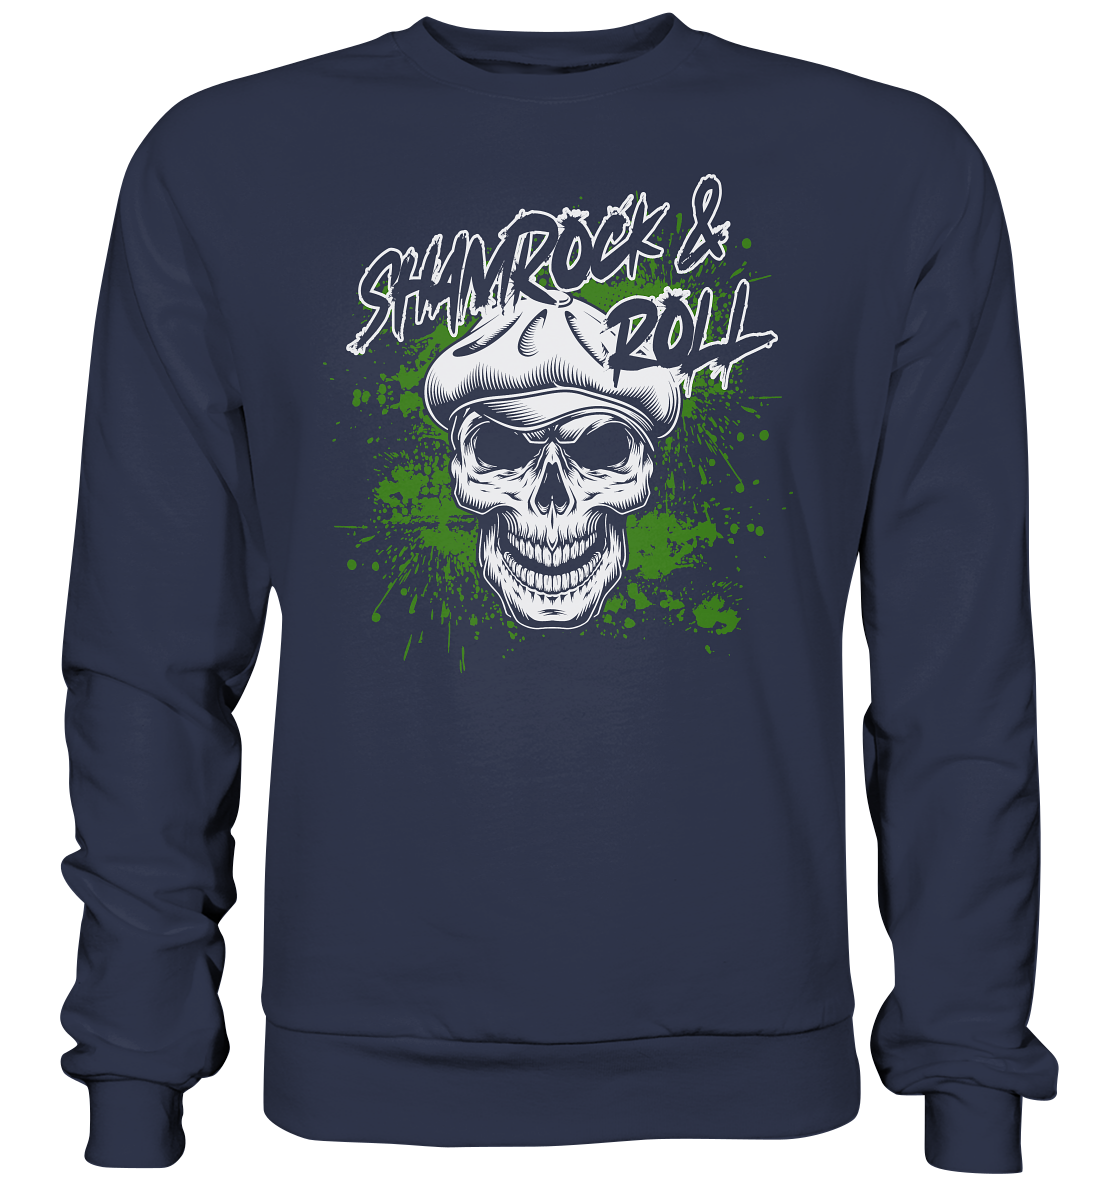 Shamrock And Roll "Skull" - Premium Sweatshirt